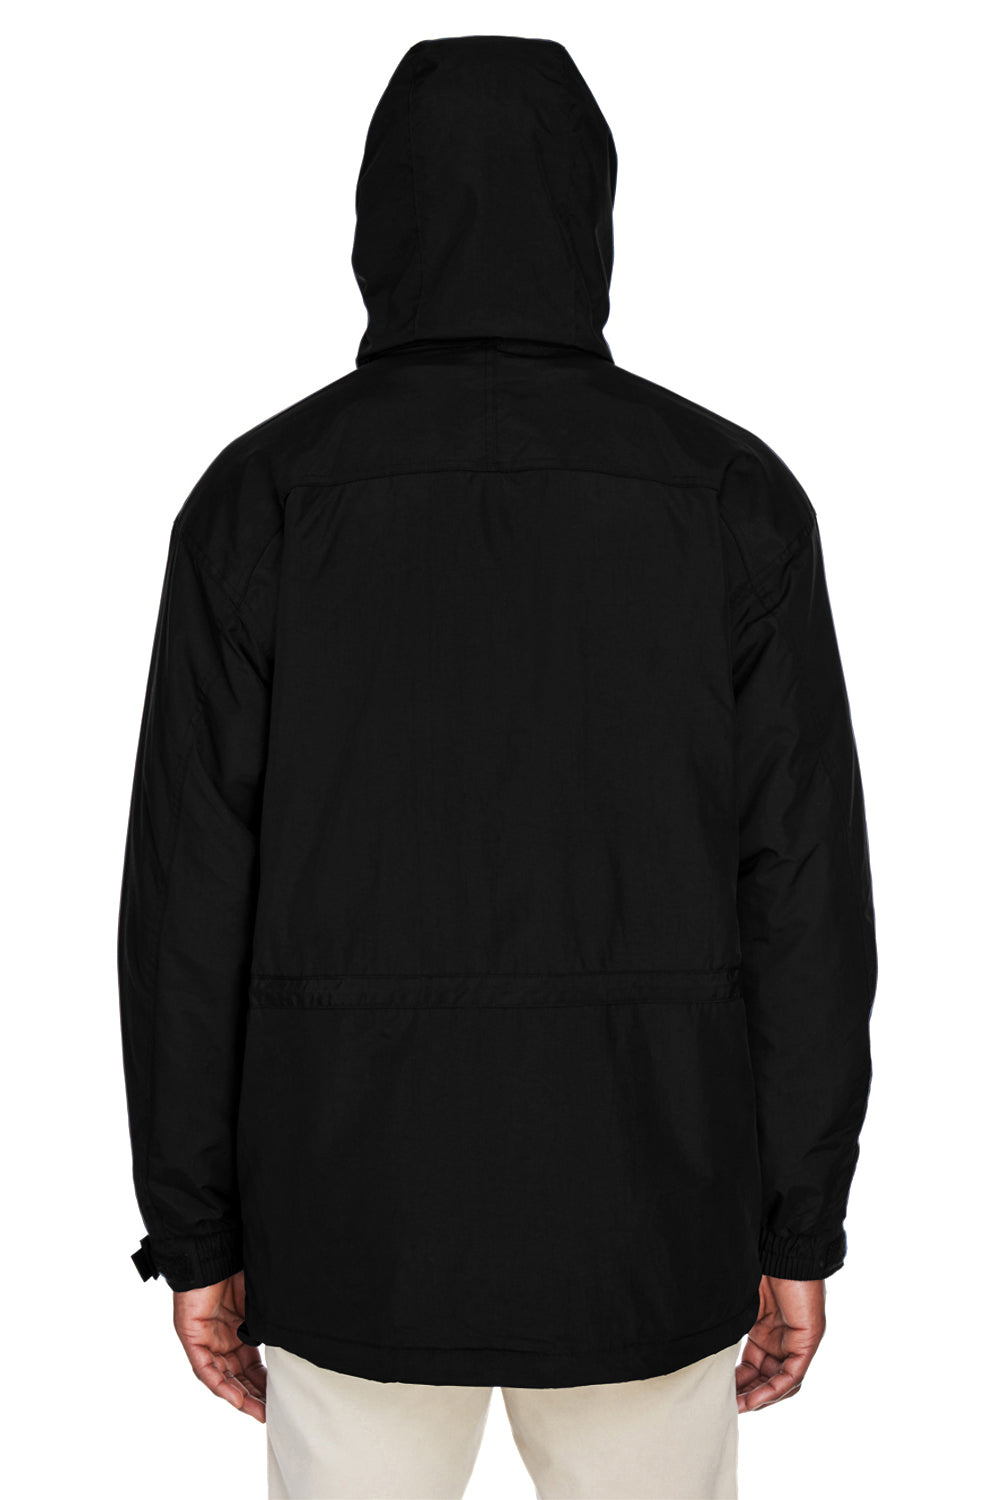 North End 88007 Mens 3-in-1 Full Zip Hooded Jacket Black Back